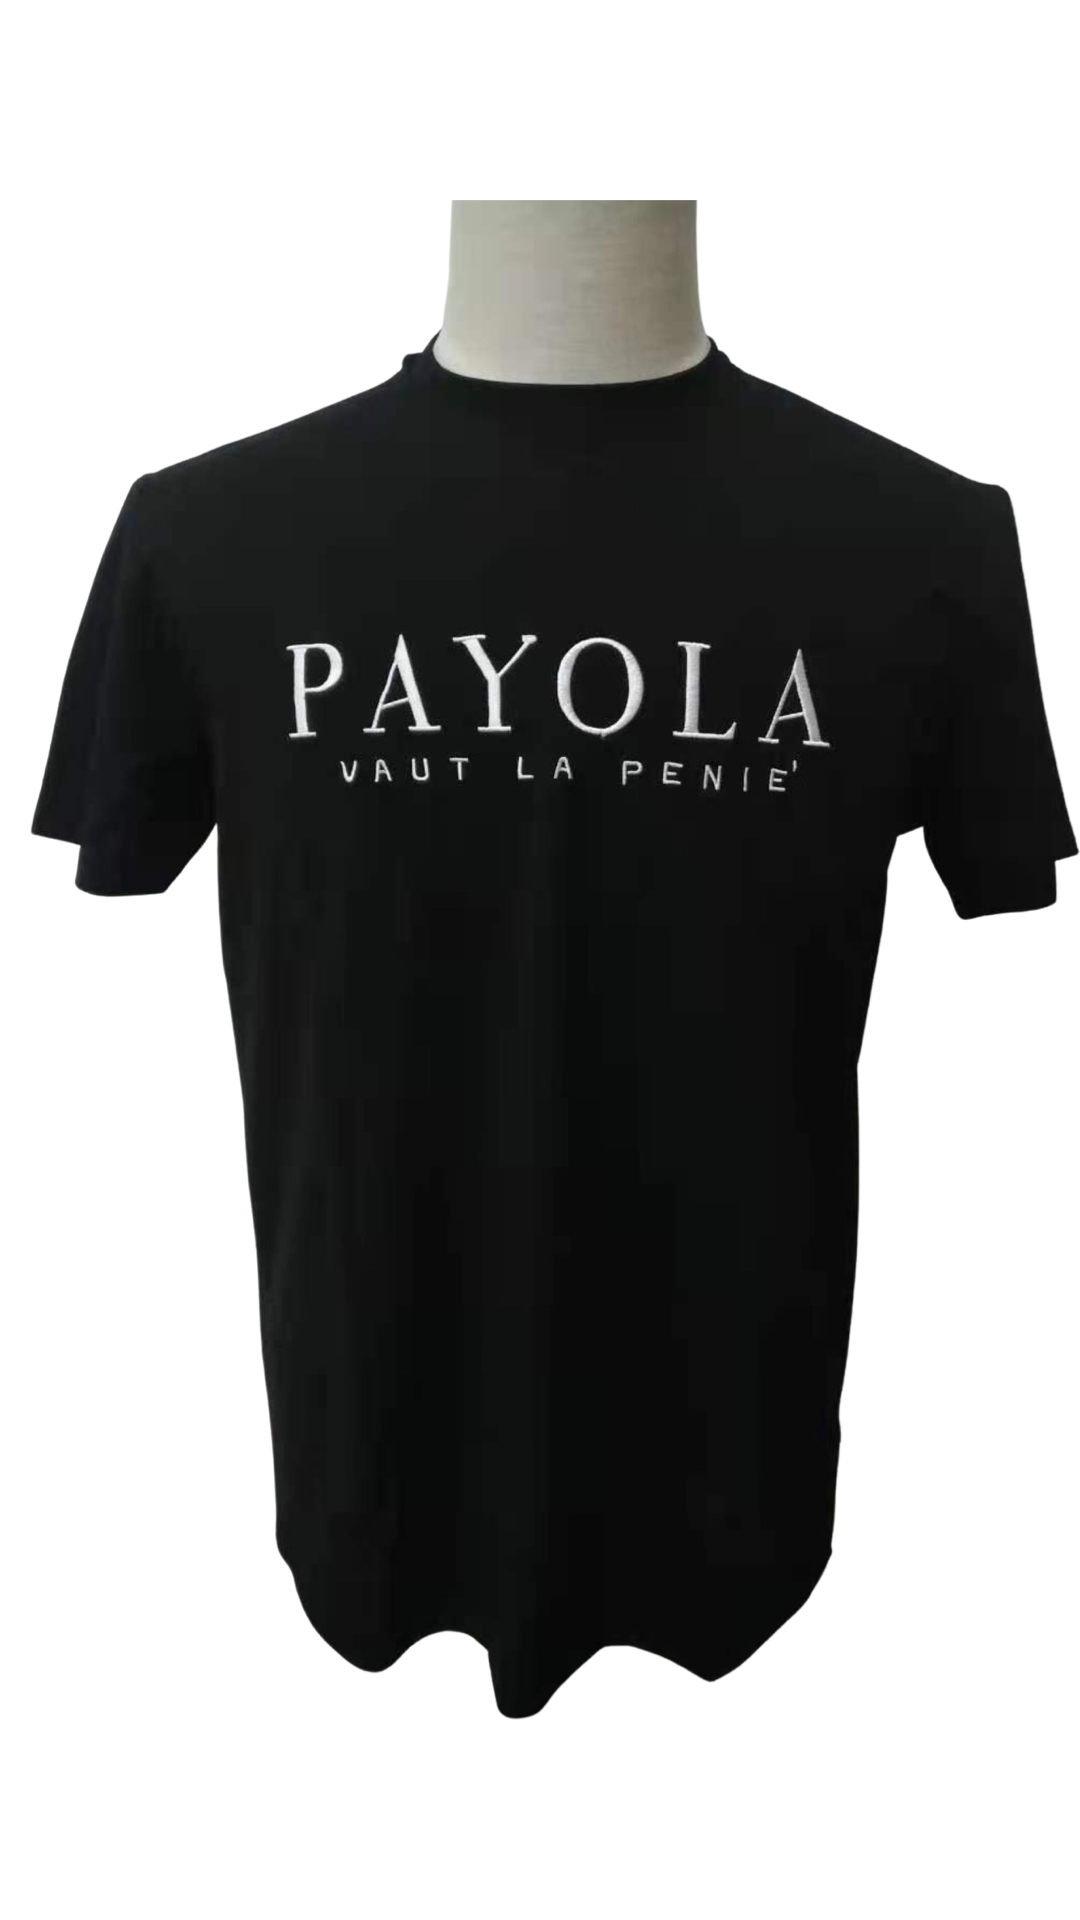 Payola Vaut La Penie' Signature T-Shirt (Black)